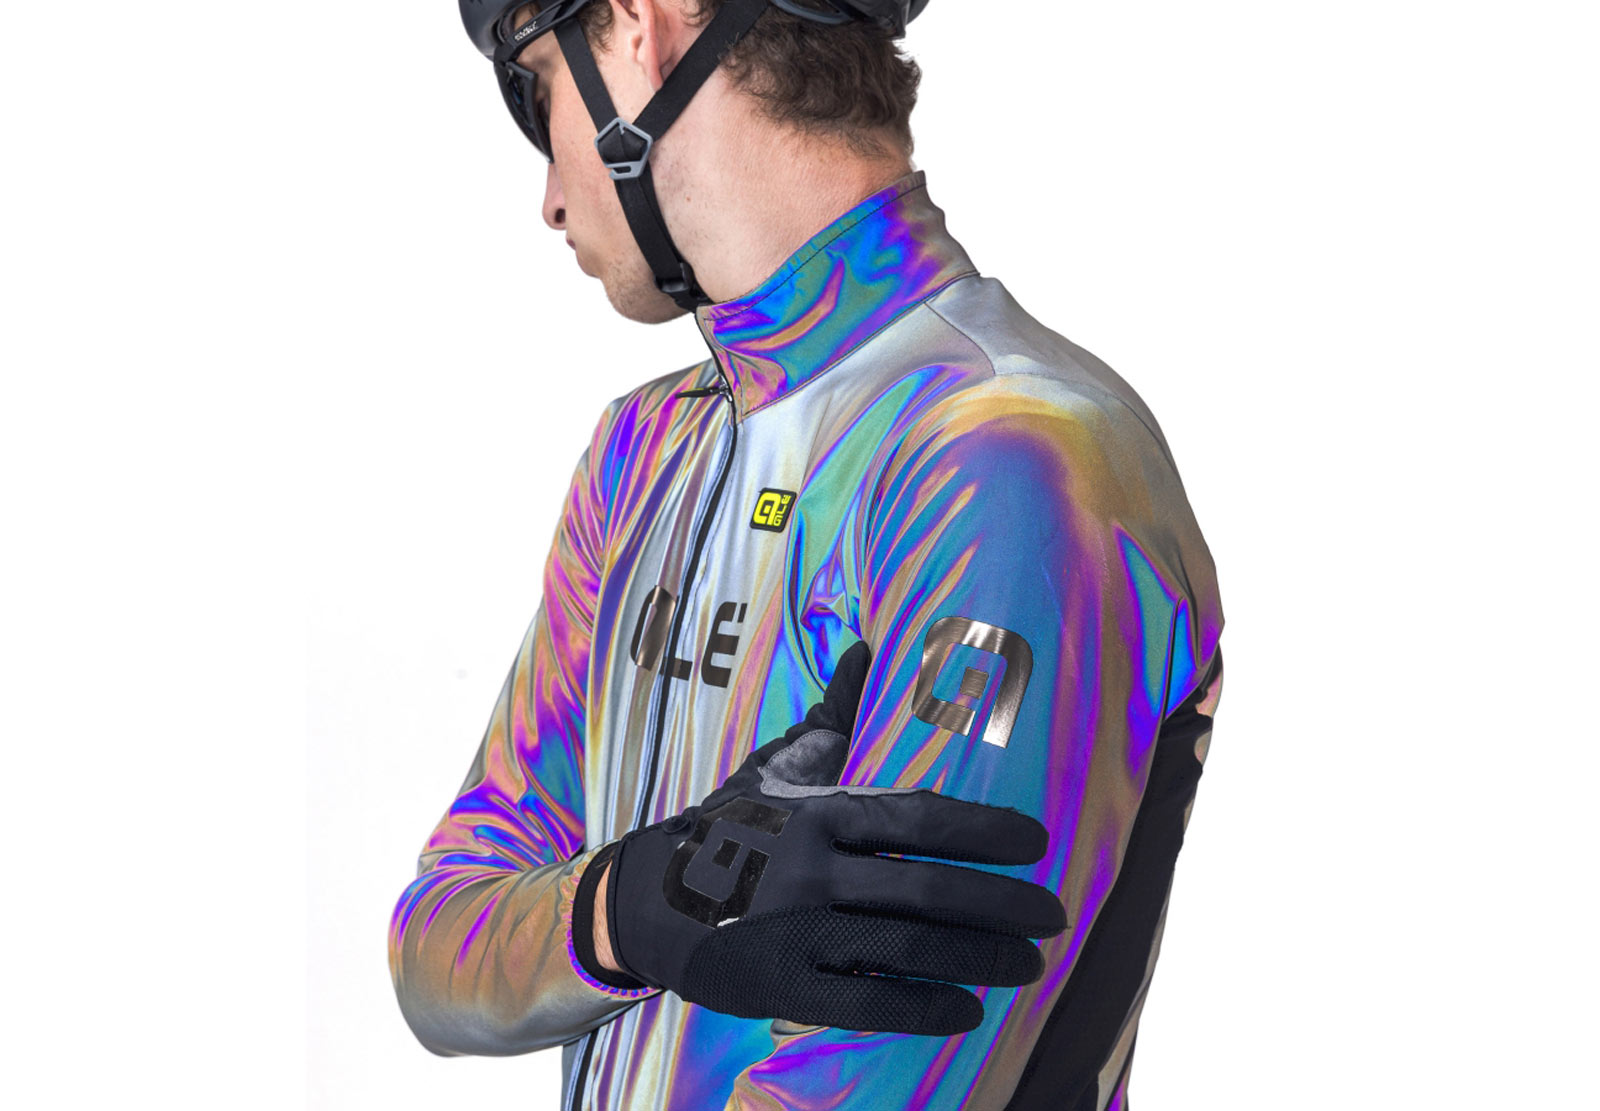 An Oil Slick Cycling Jacket? The Ale Guscio Iridescent Reflective